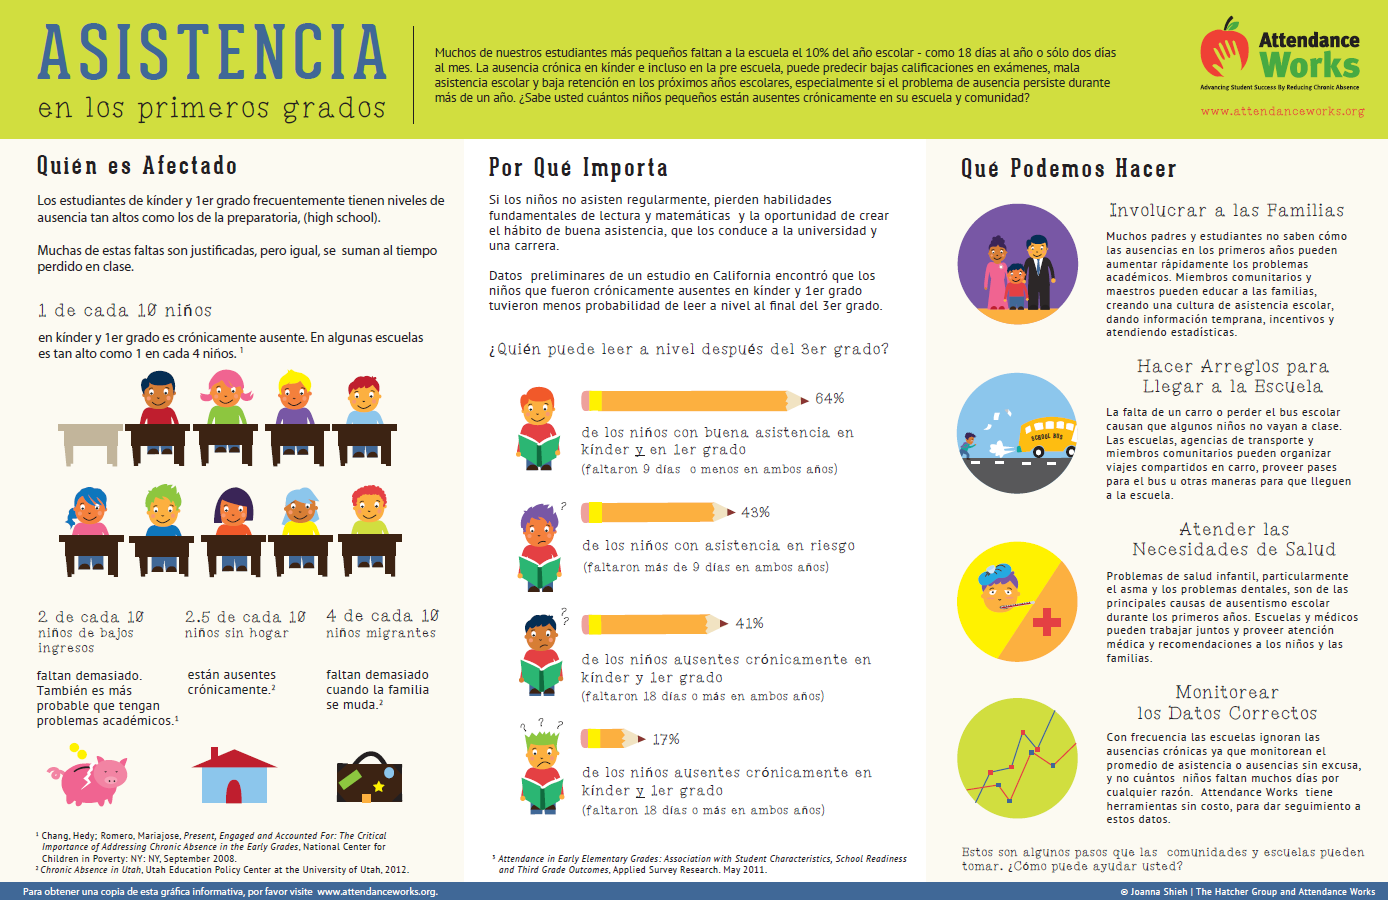 Infographic - Spanish - Impact of Attendance